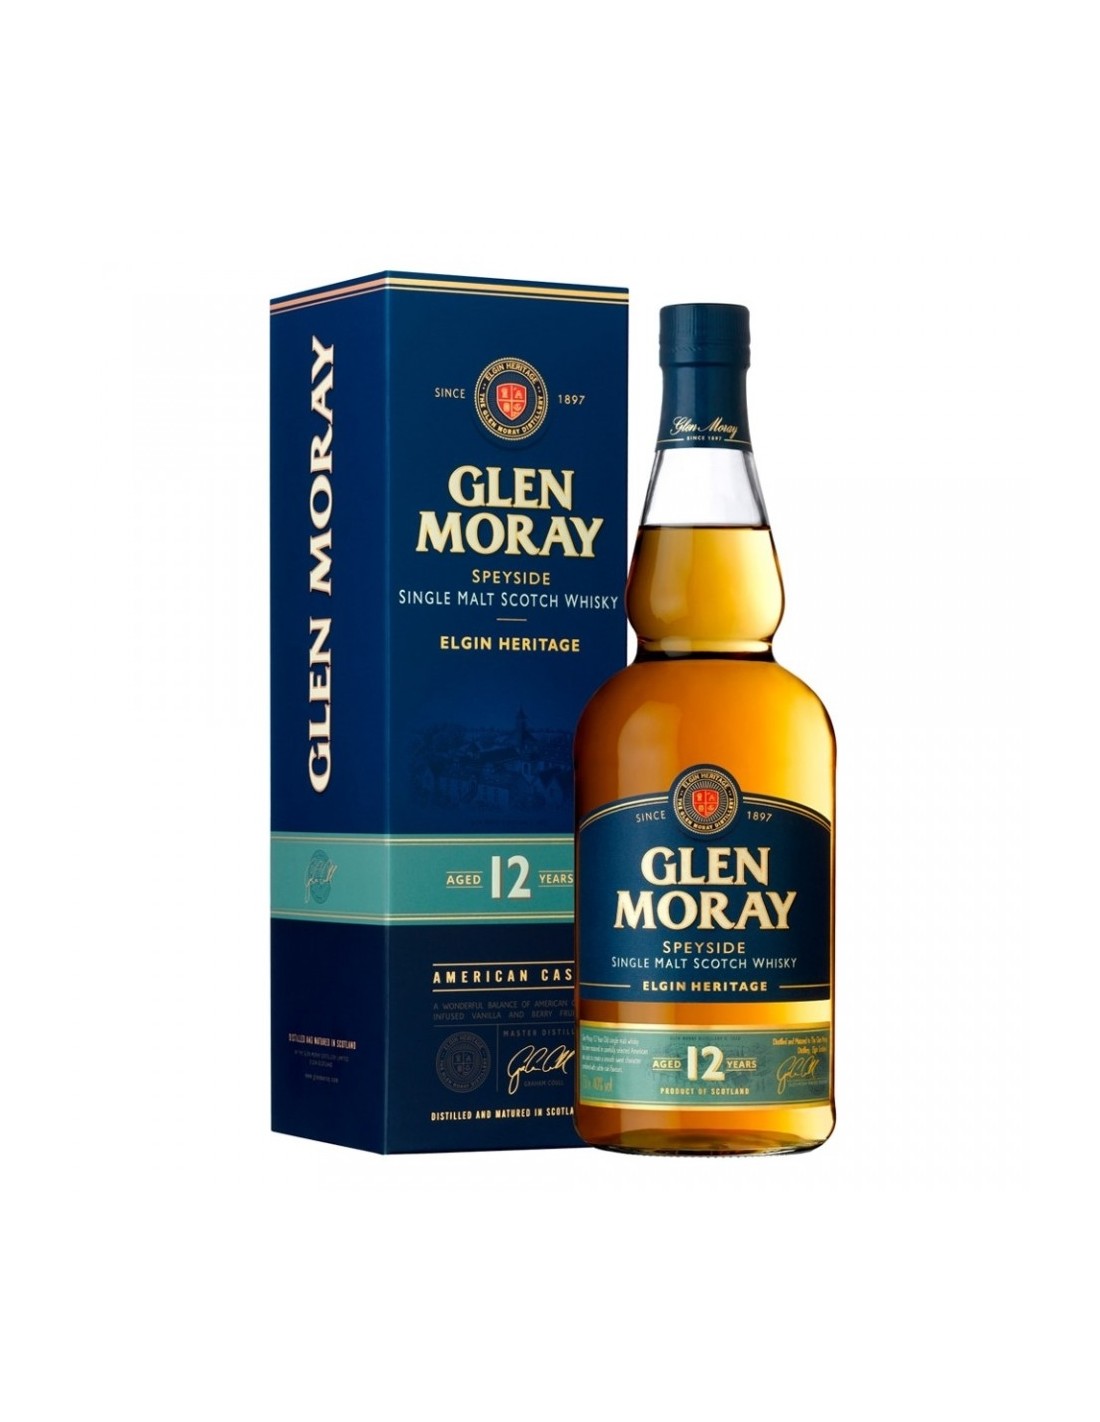 Whisky Glen Moray, 0.7L, 12 ani, 40% alc., Scotia alcooldiscount.ro